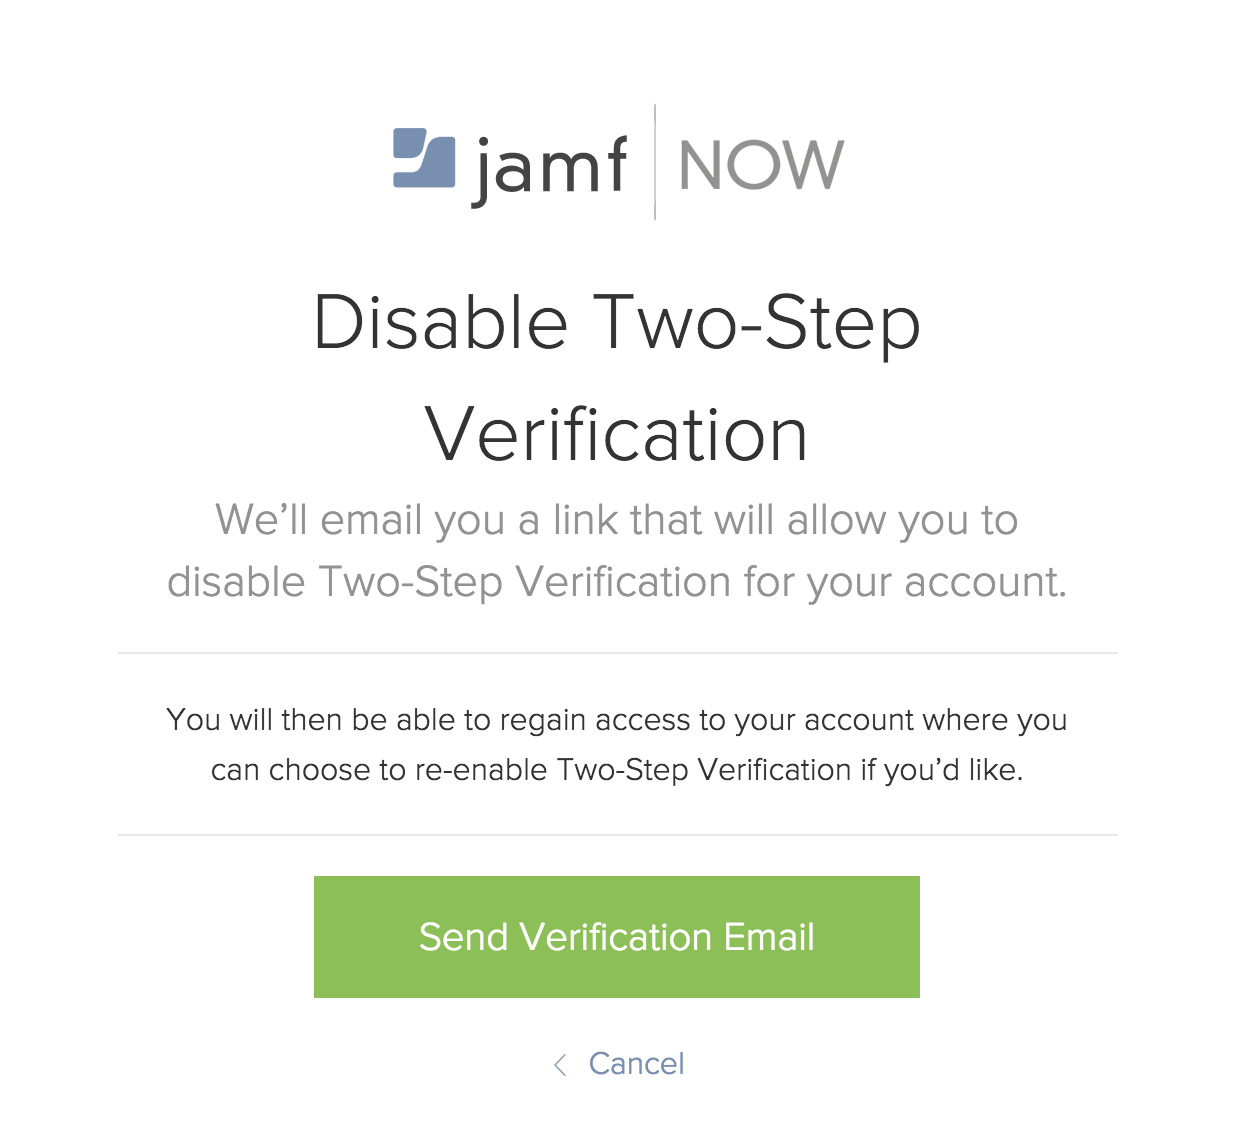 Send Verification Email (確認メールを送信) ボタンがある Disable Two-Step Verification (2 段階認証を無効にする) ポップアップ画面のスクリーンショット